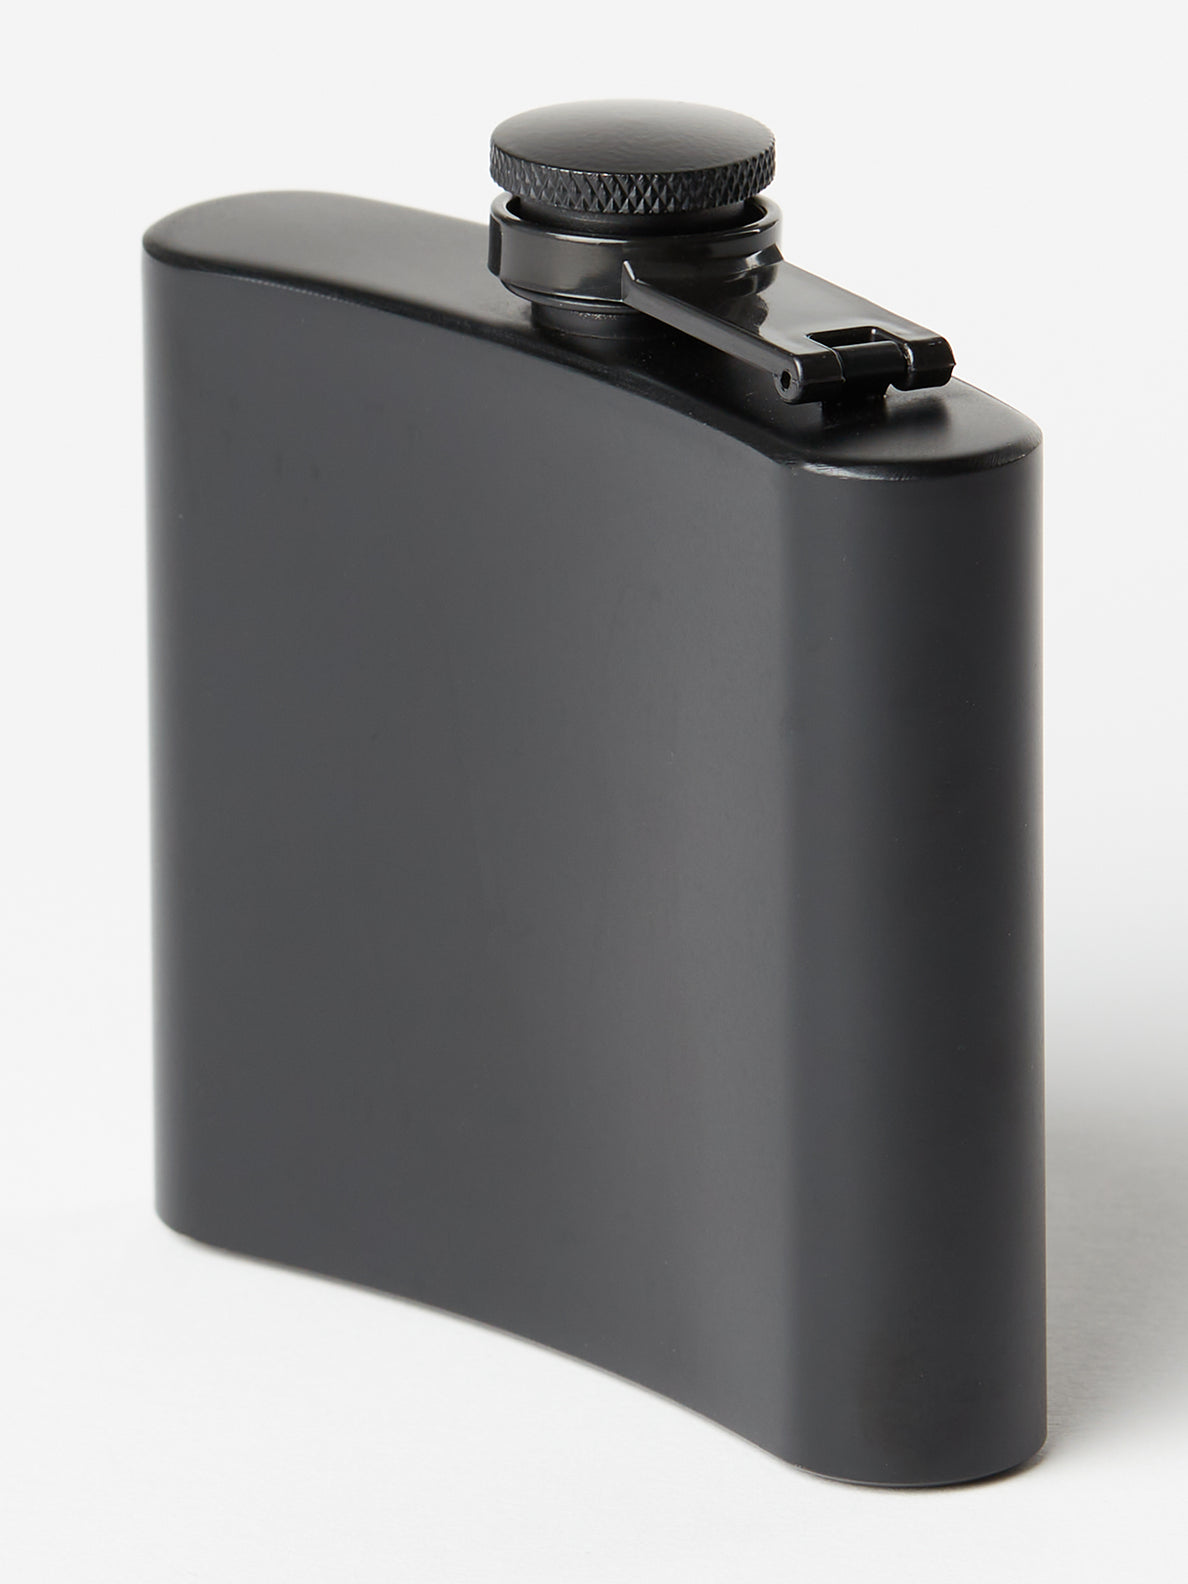 5oz Stainless Steel Volcom Flask - Black